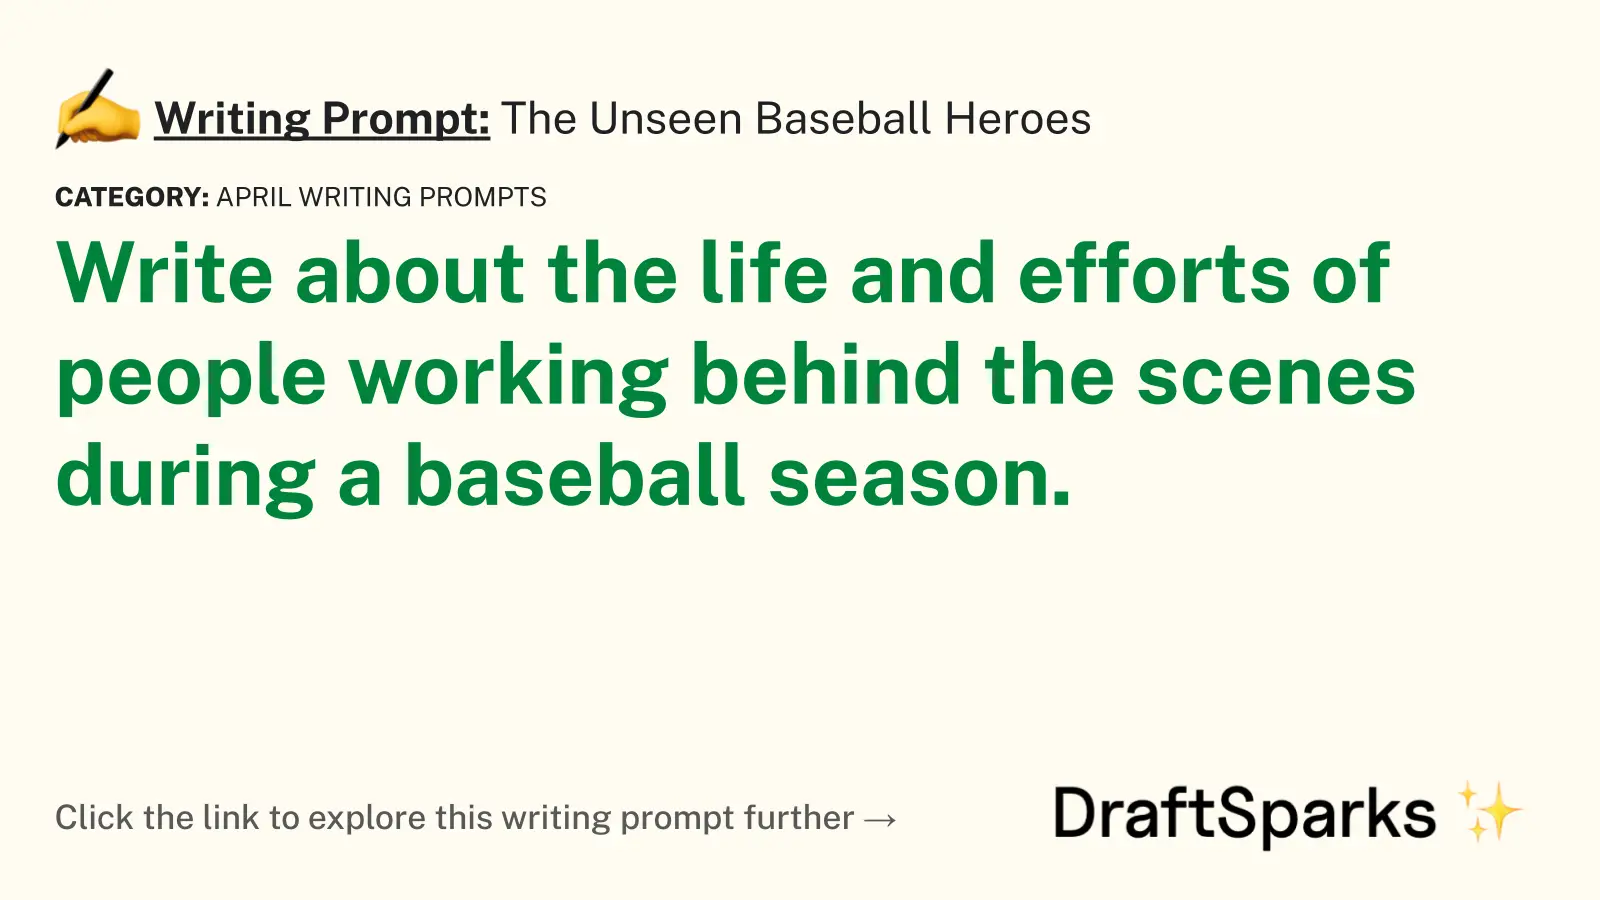 The Unseen Baseball Heroes